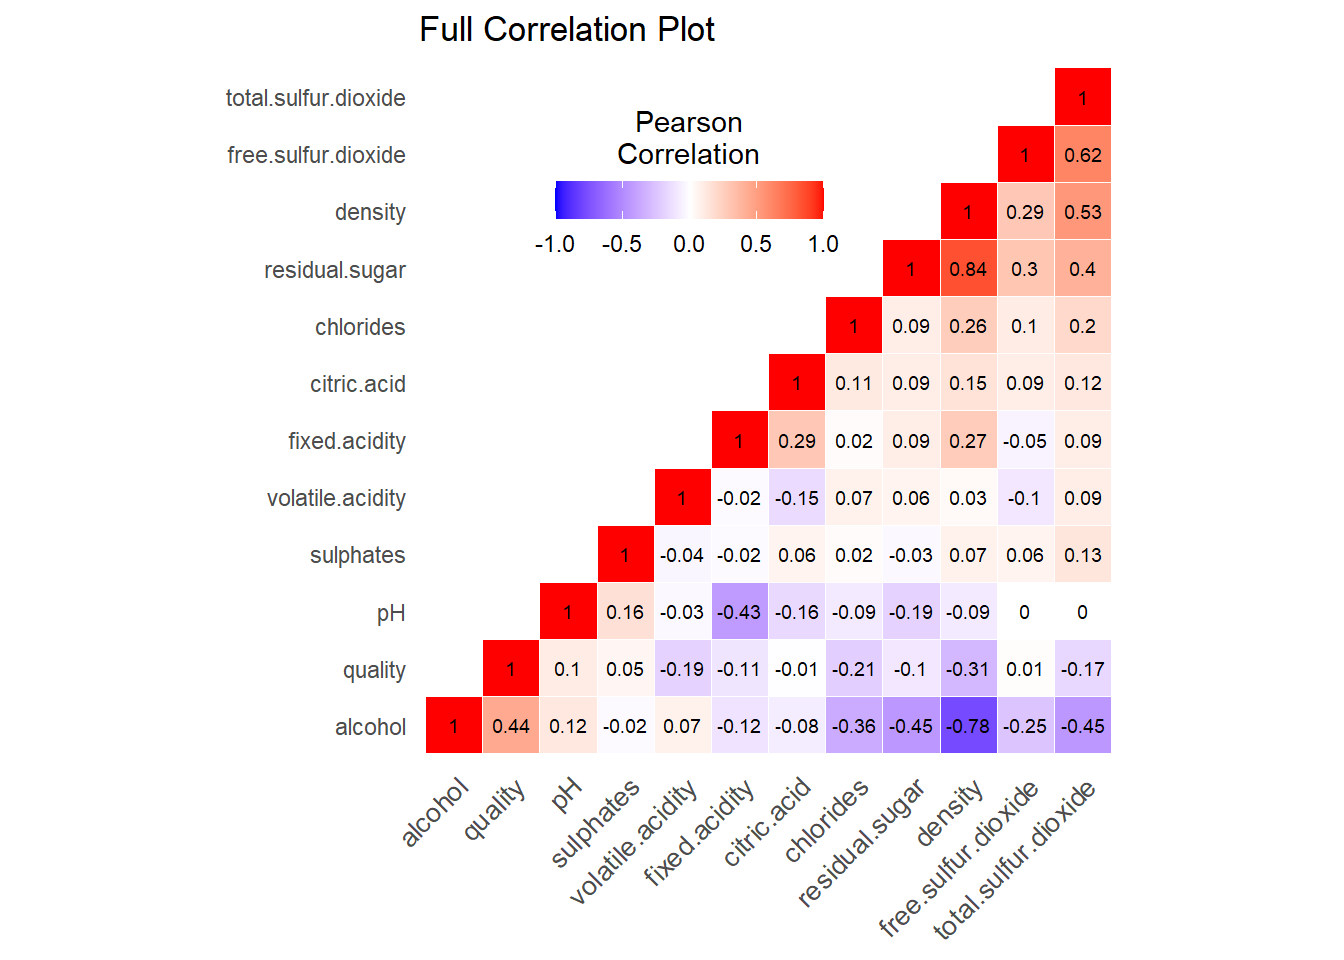 The full correlation matrix of the data.